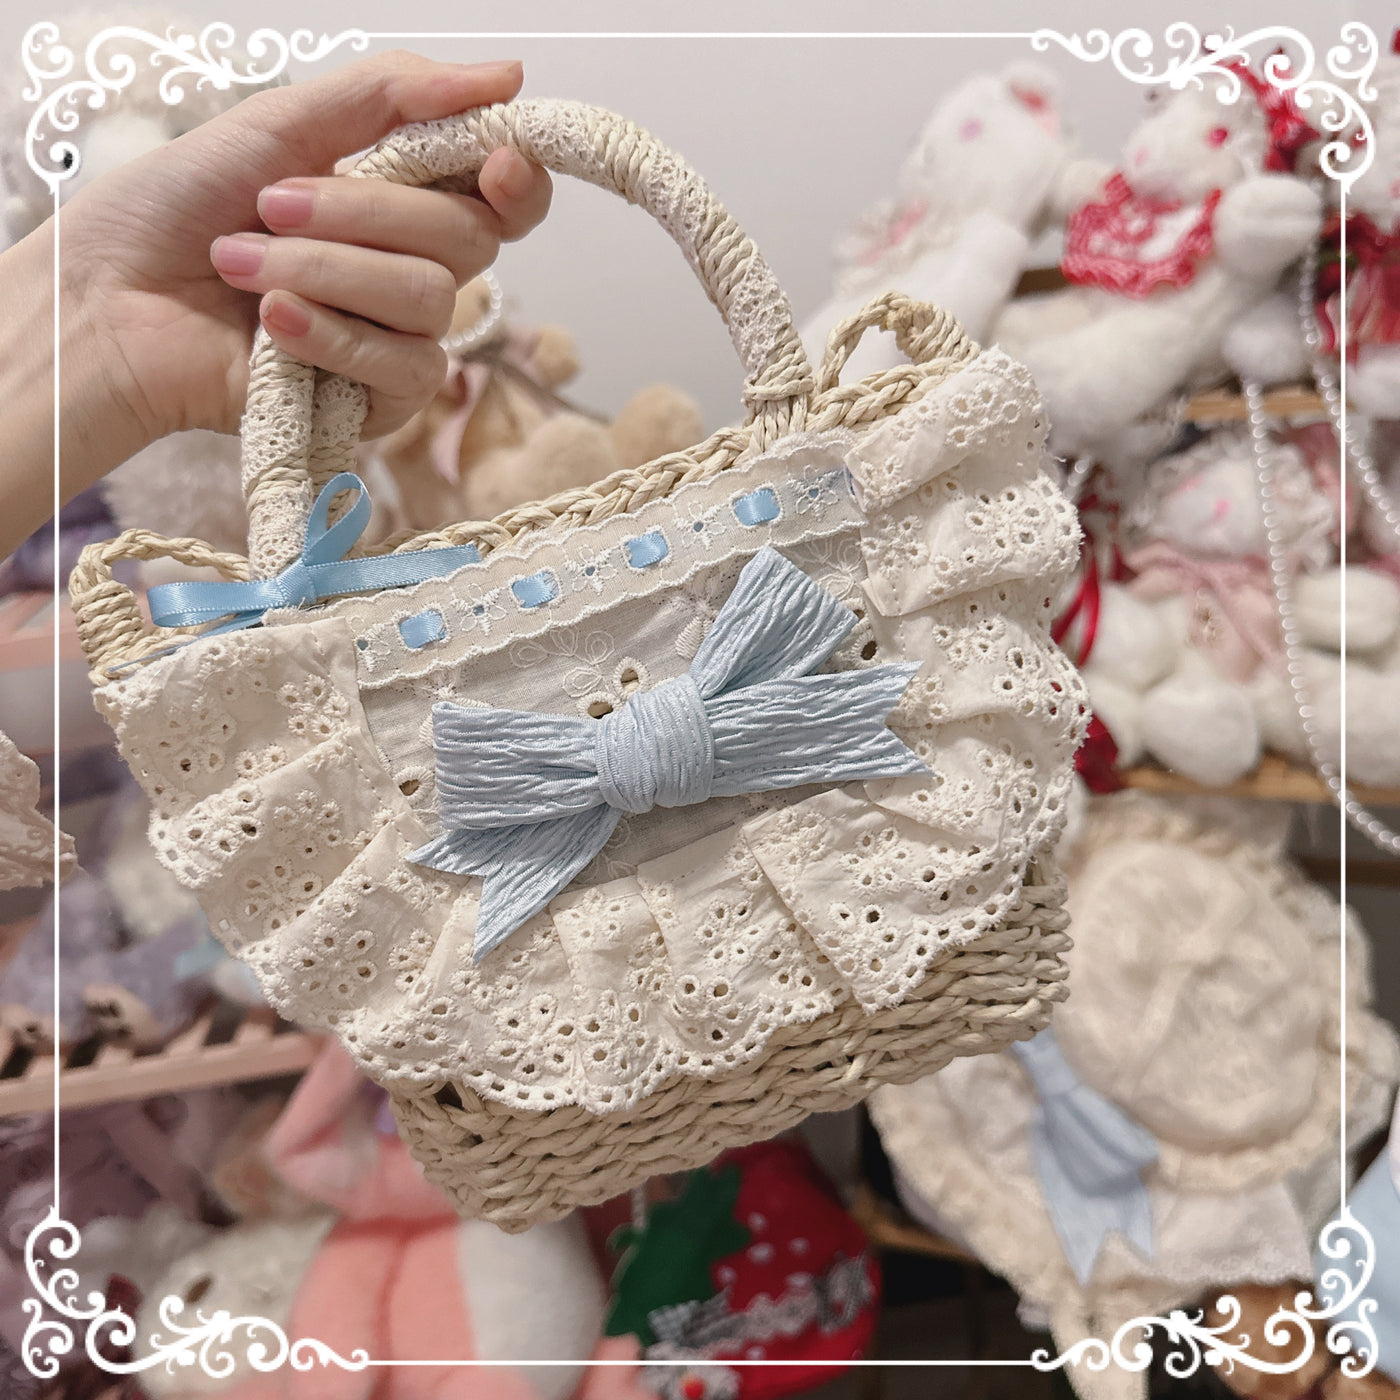 Chestnut Lolita~Daily Lolita Cloth Handbags   